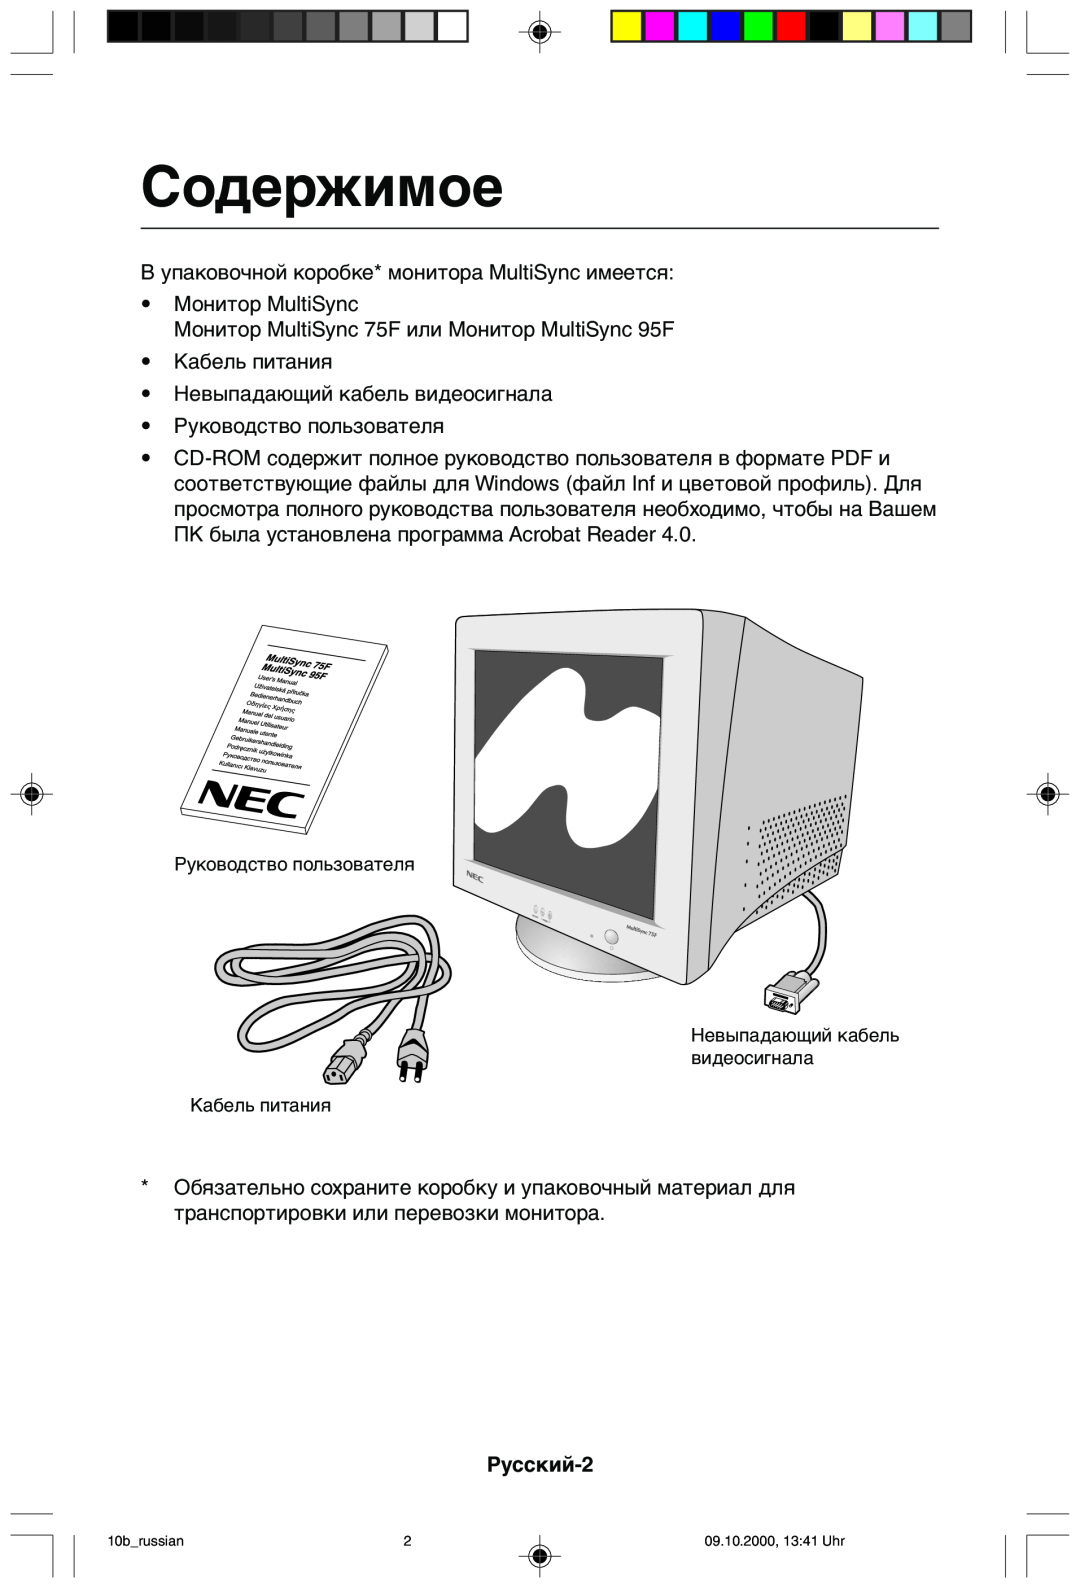 NEC 95F user manual Содержимое, Русский-2 